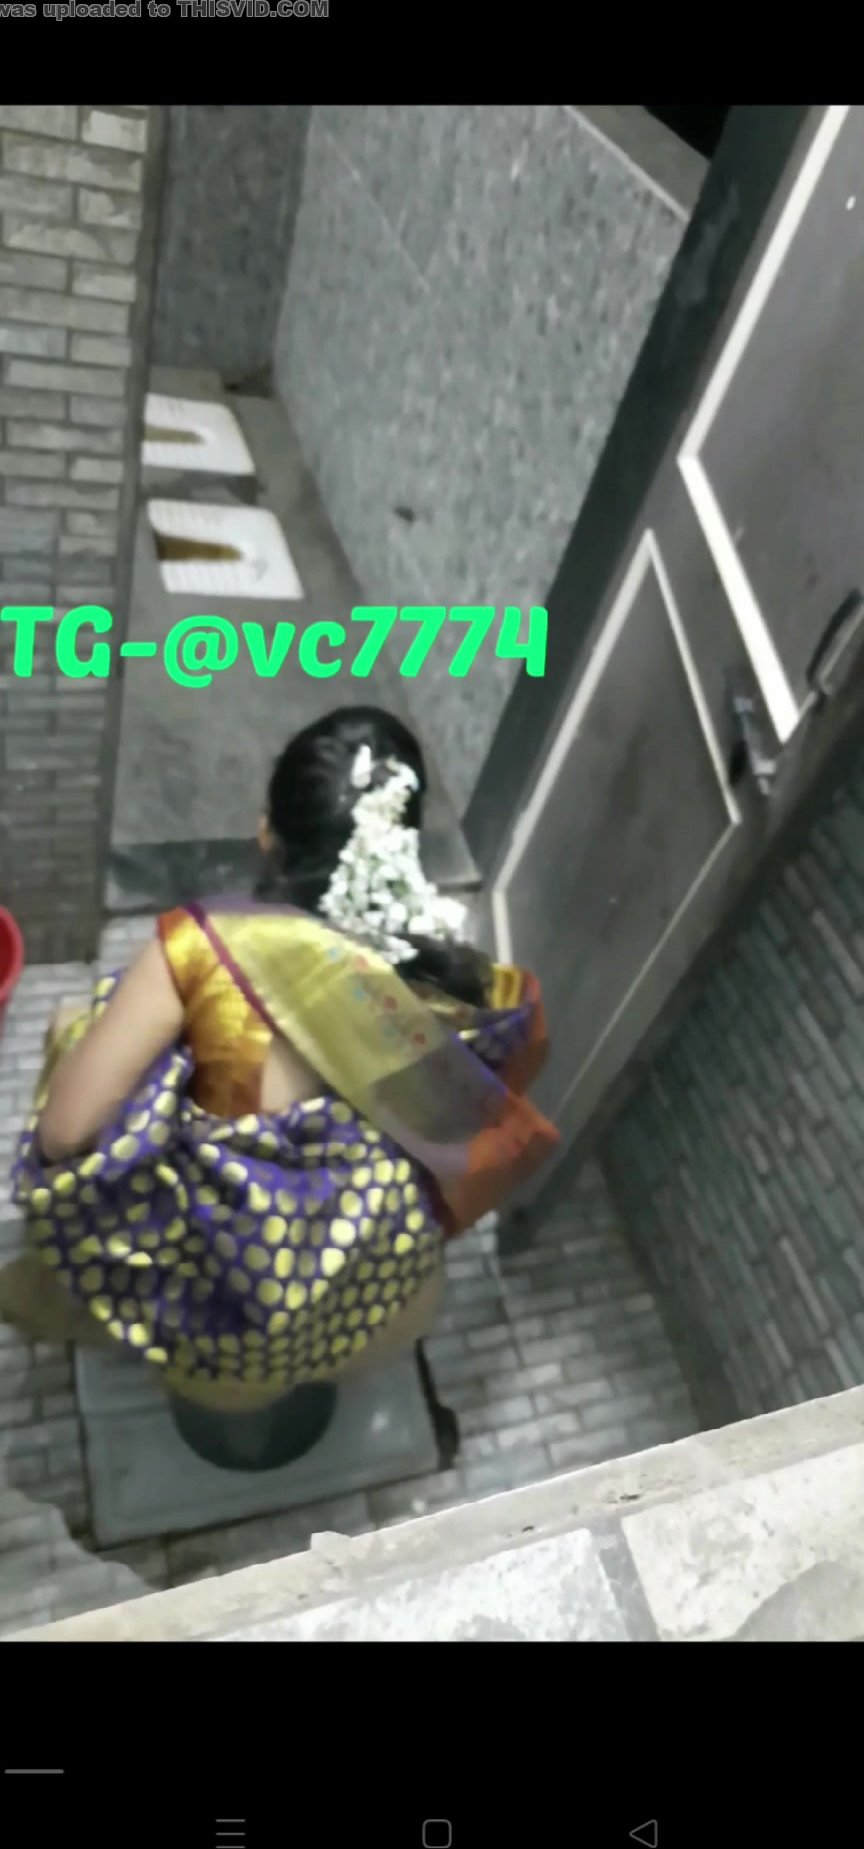 Indian desi toilet videos going to upload soon